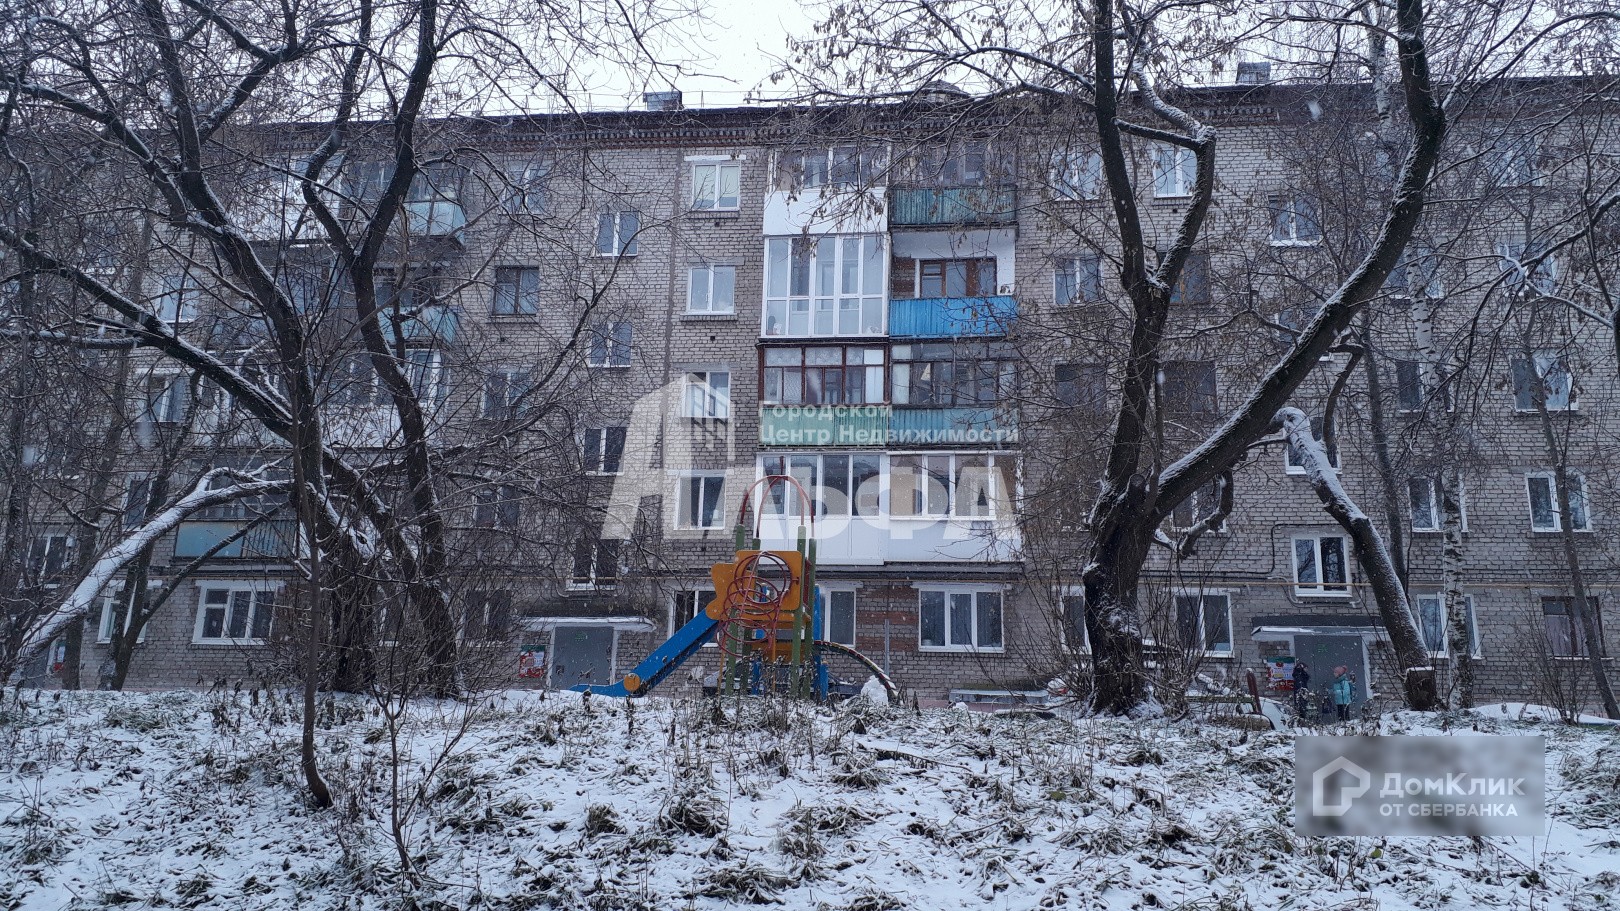 край. Пермский, г. Соликамск, ул. Калийная, д. 136-фасад здания